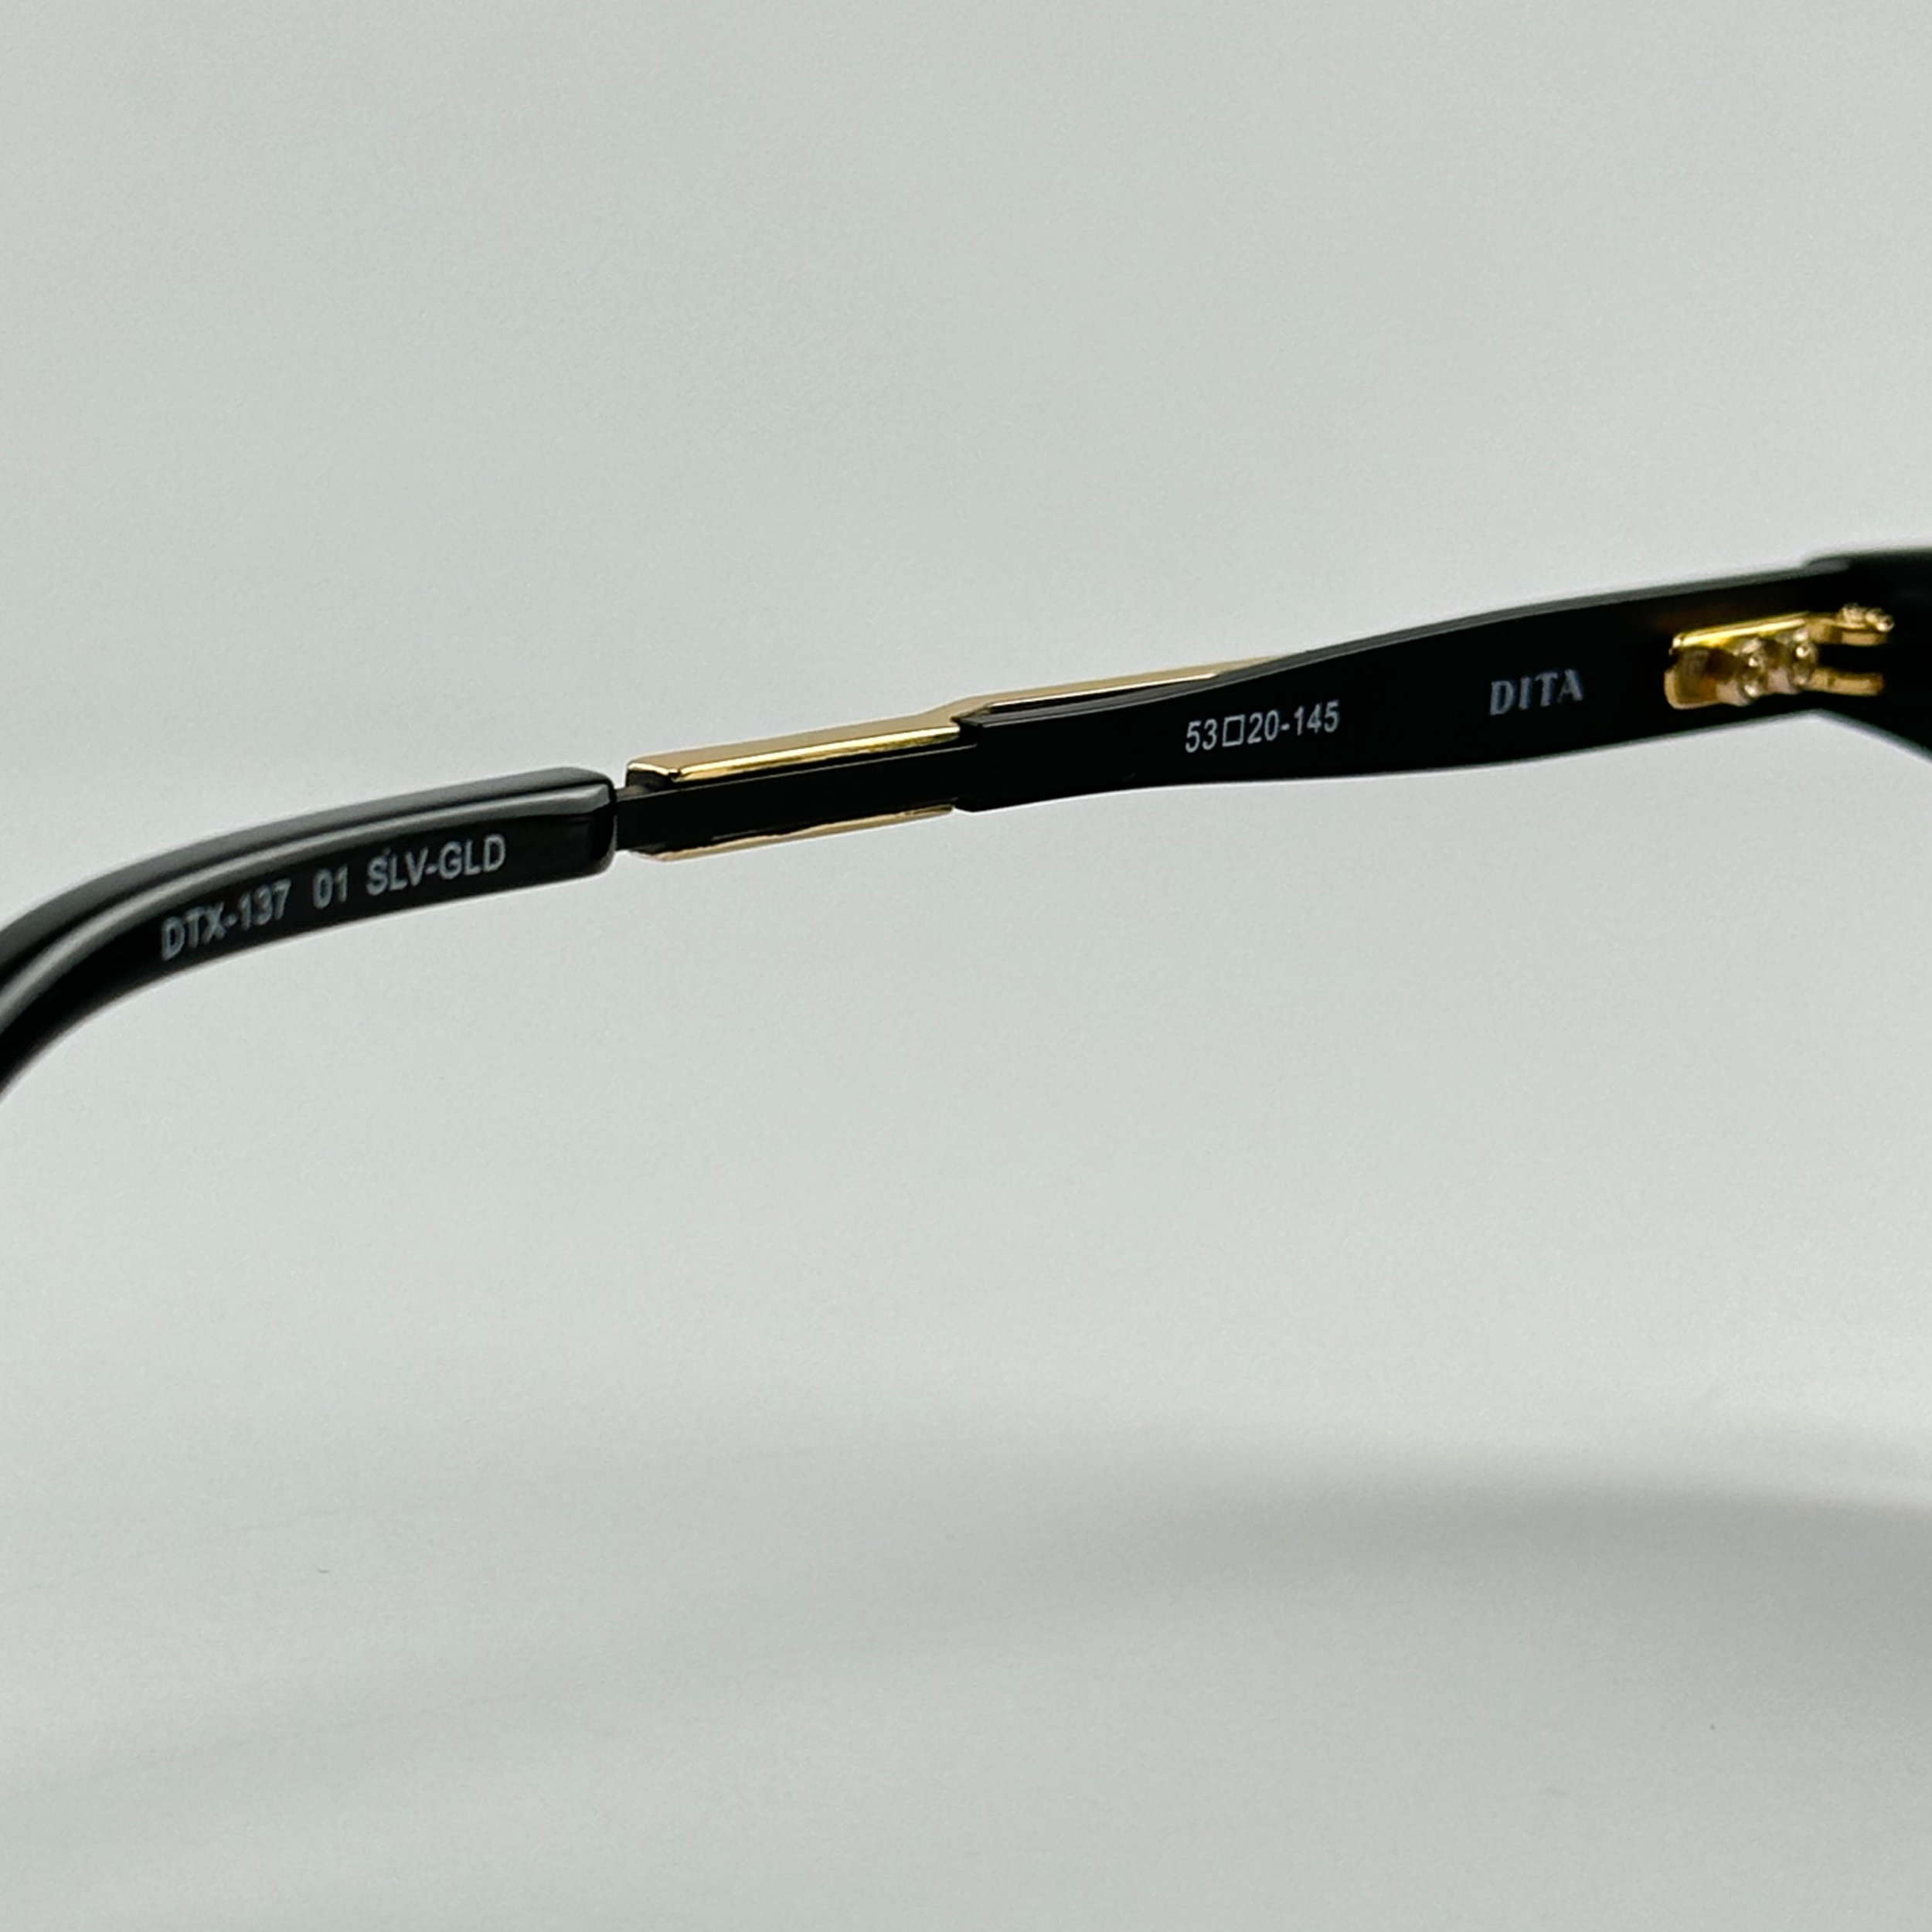 عینک آفتابی دیتا مدل DTX-137 01 SLV-GLD -  - 11